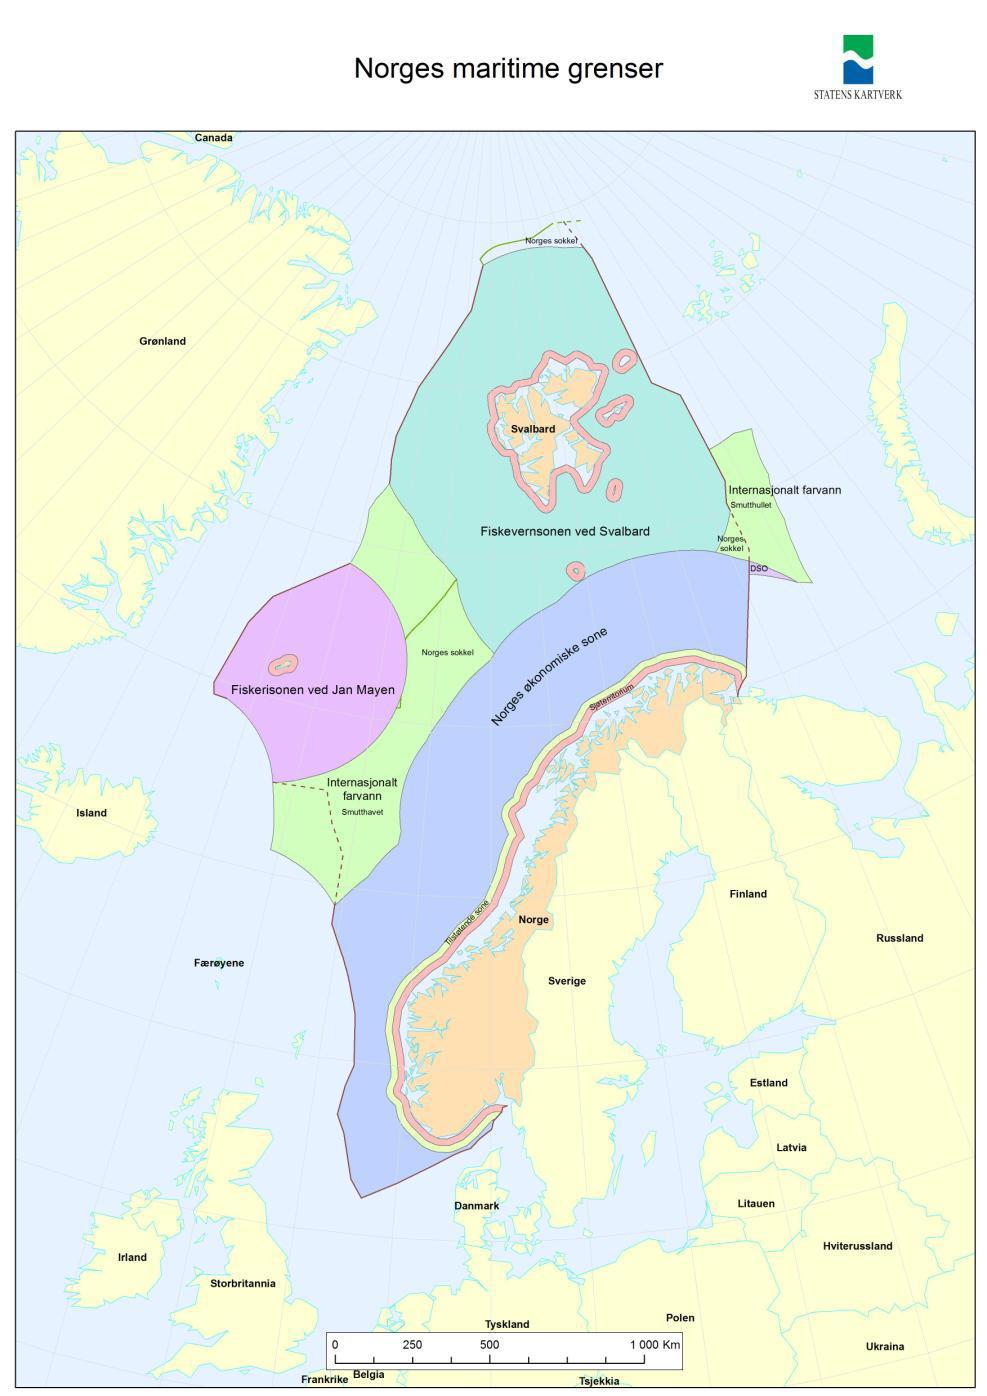 Norwegian and international waters NORWAY: Population: Mainland: Spitsbergen: Jan Mayen: Mainland coastline: 5,2 million 323.787 sq.km 61.022 sq.